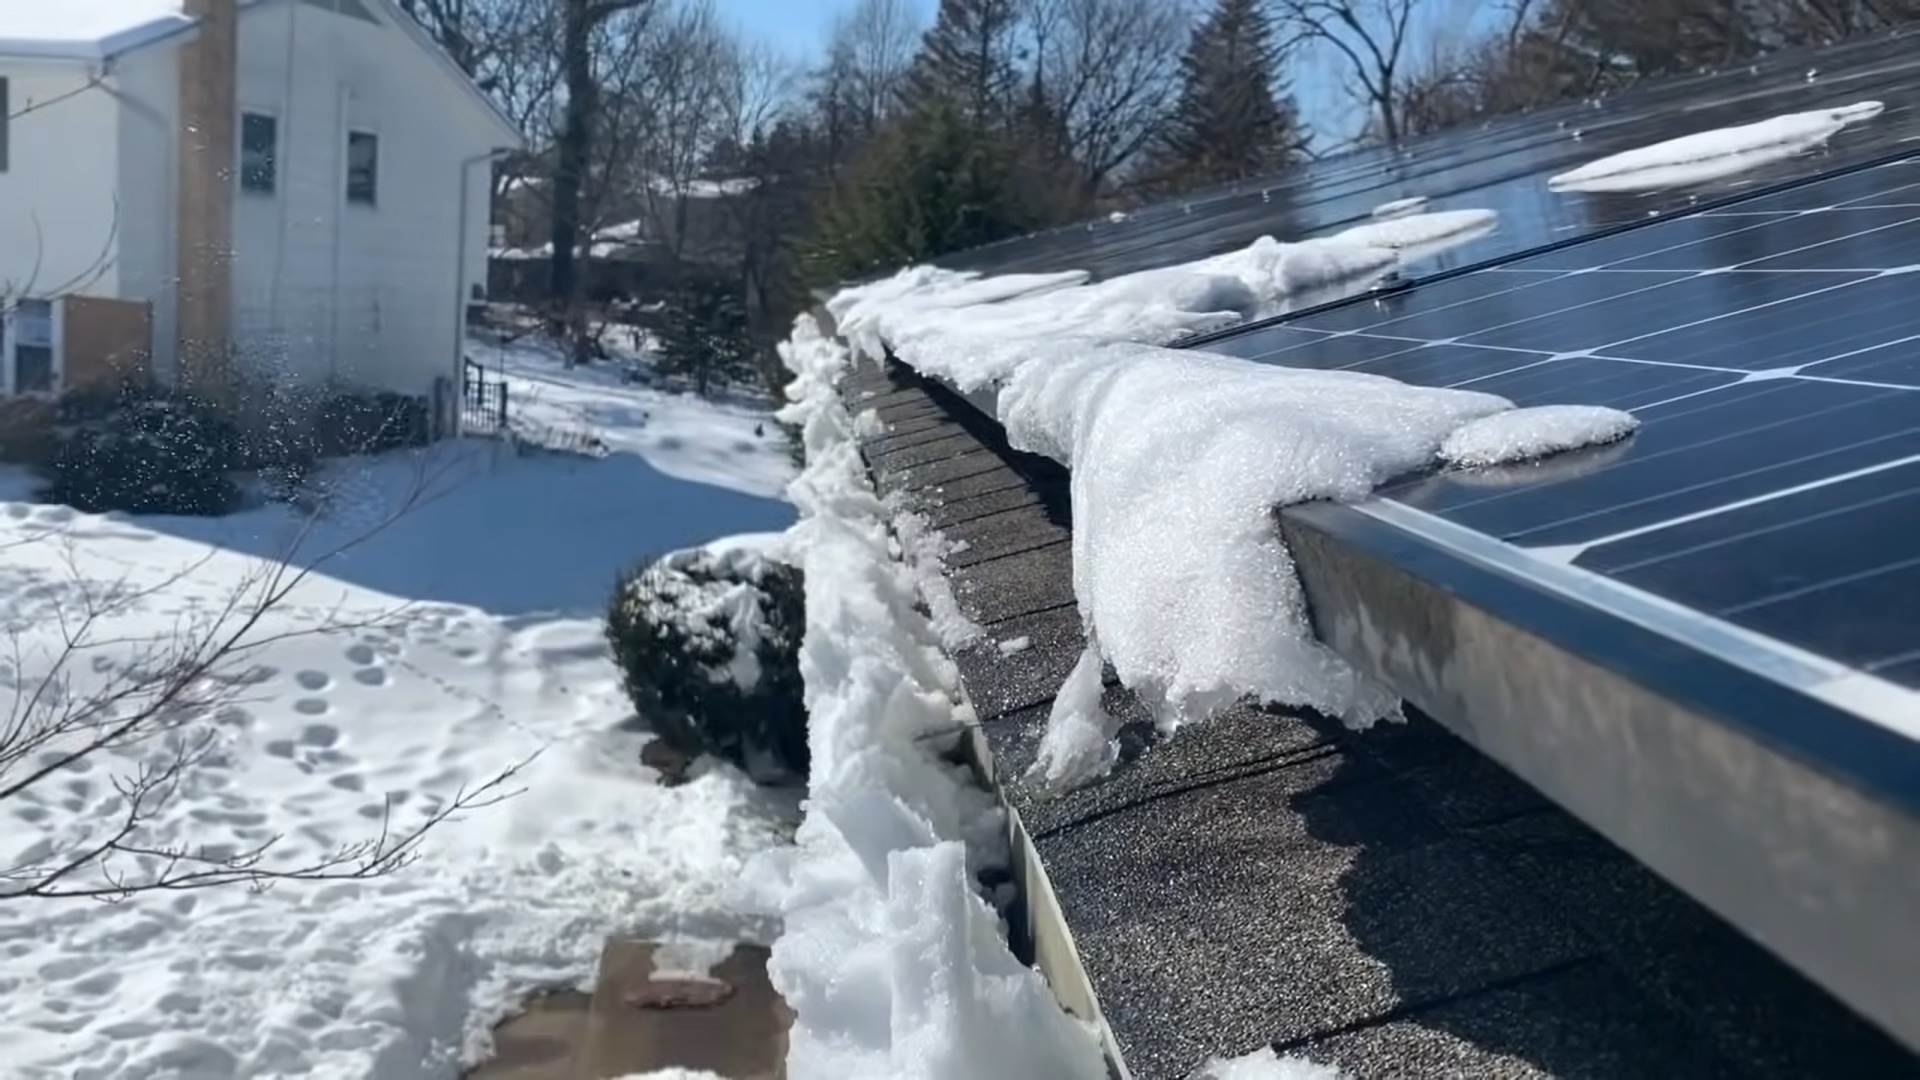  Sneg se topi sa solarnih panela 